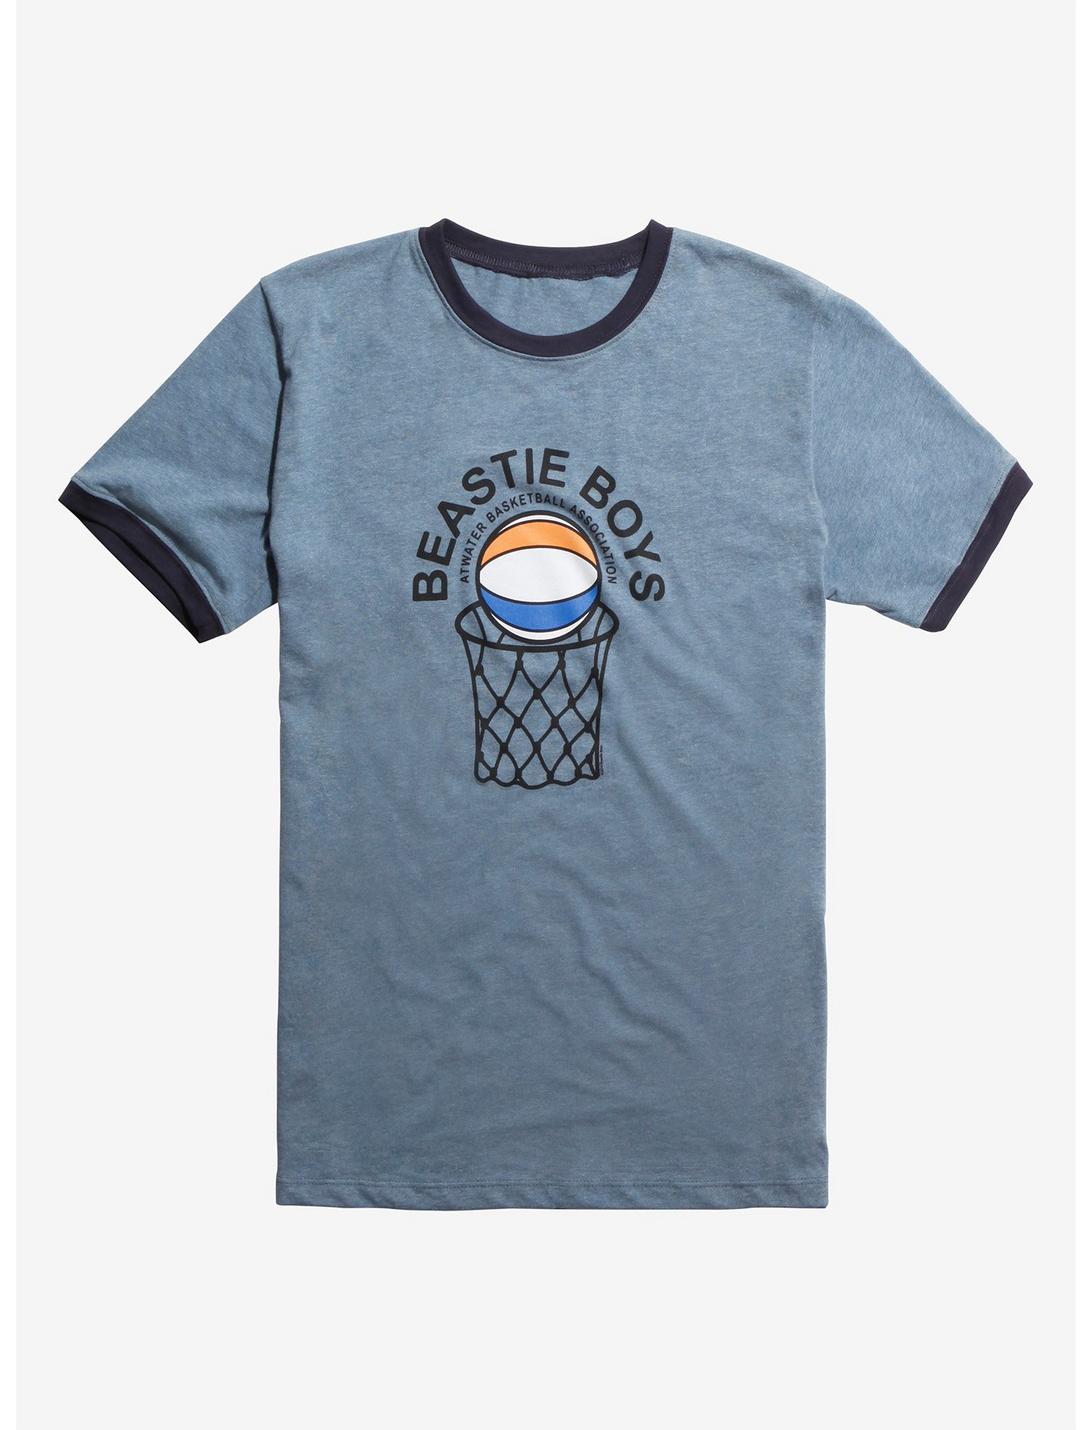 Beastie Boys Atwater Basketball Association Ringer T-Shirt, BLUE, hi-res